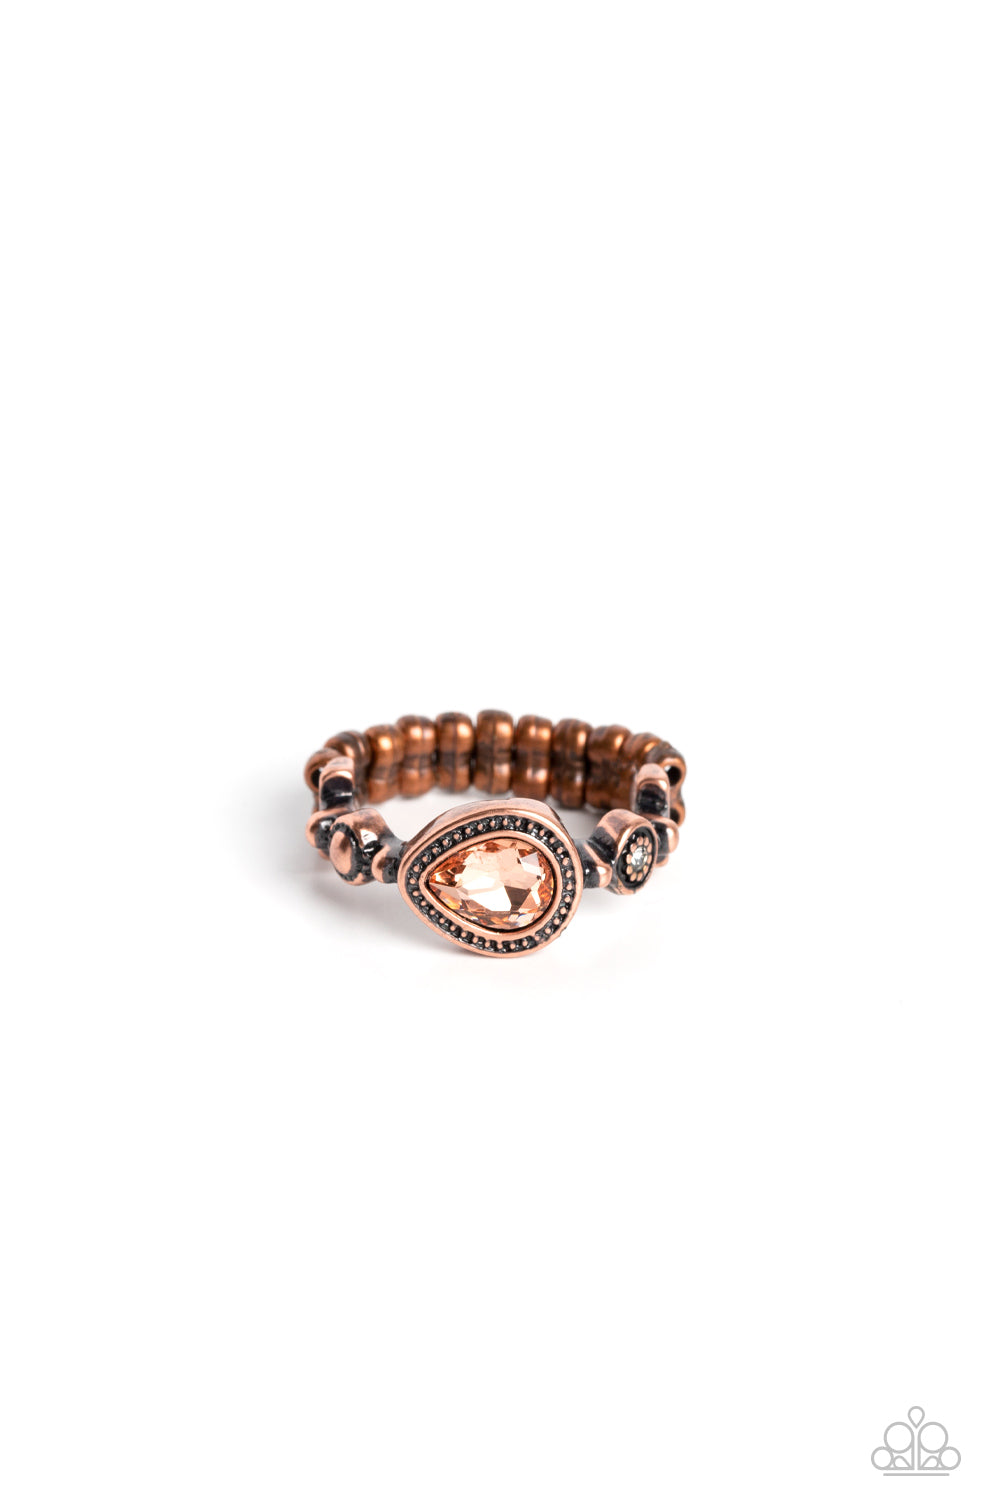 Artistic Artifact - Copper Ring